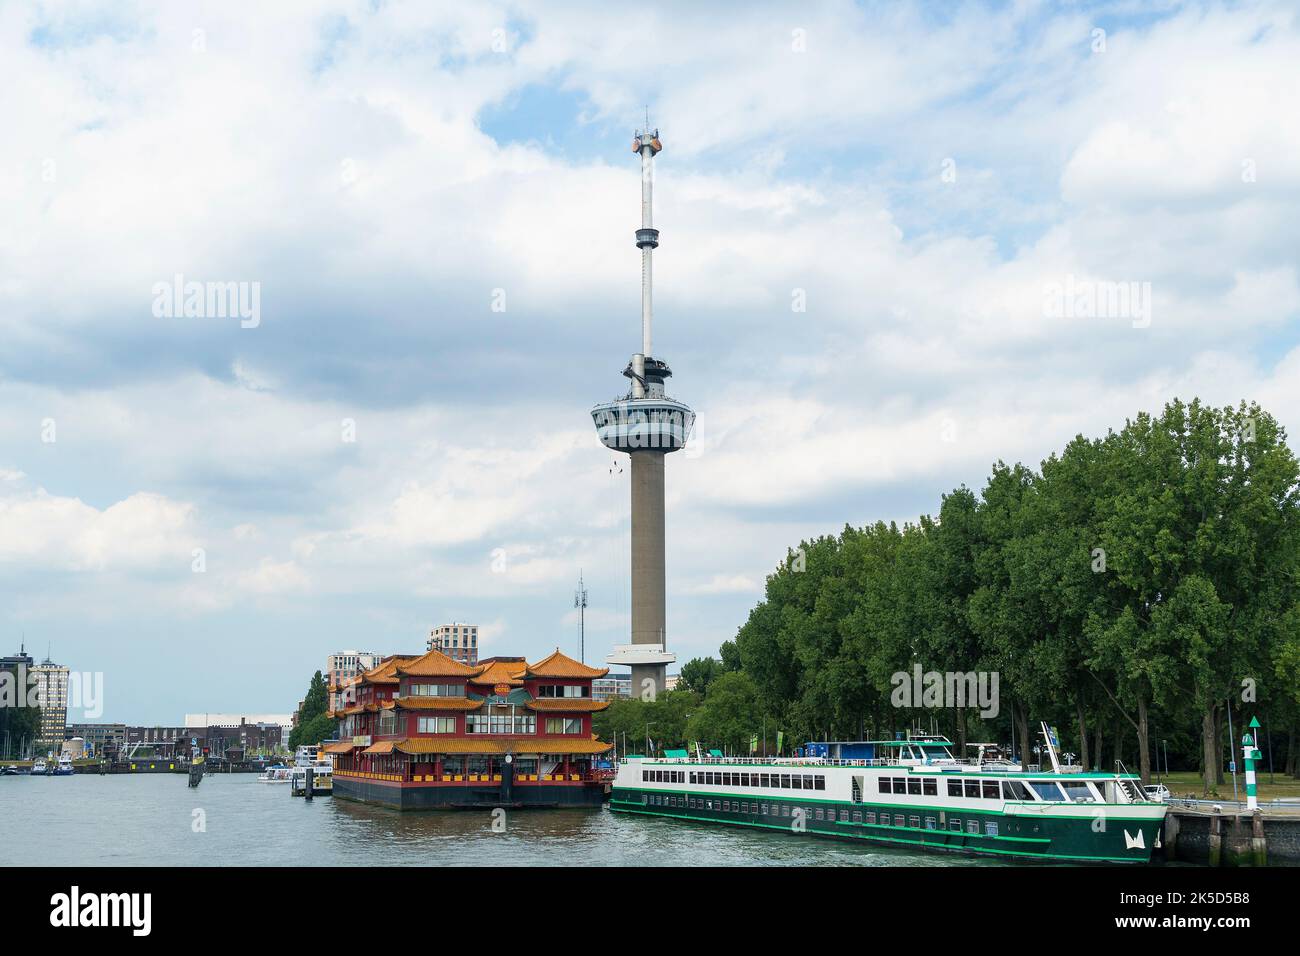 Netherlands, Rotterdam, Euromast, tourist attraction, adrenaline rush abseiling Stock Photo